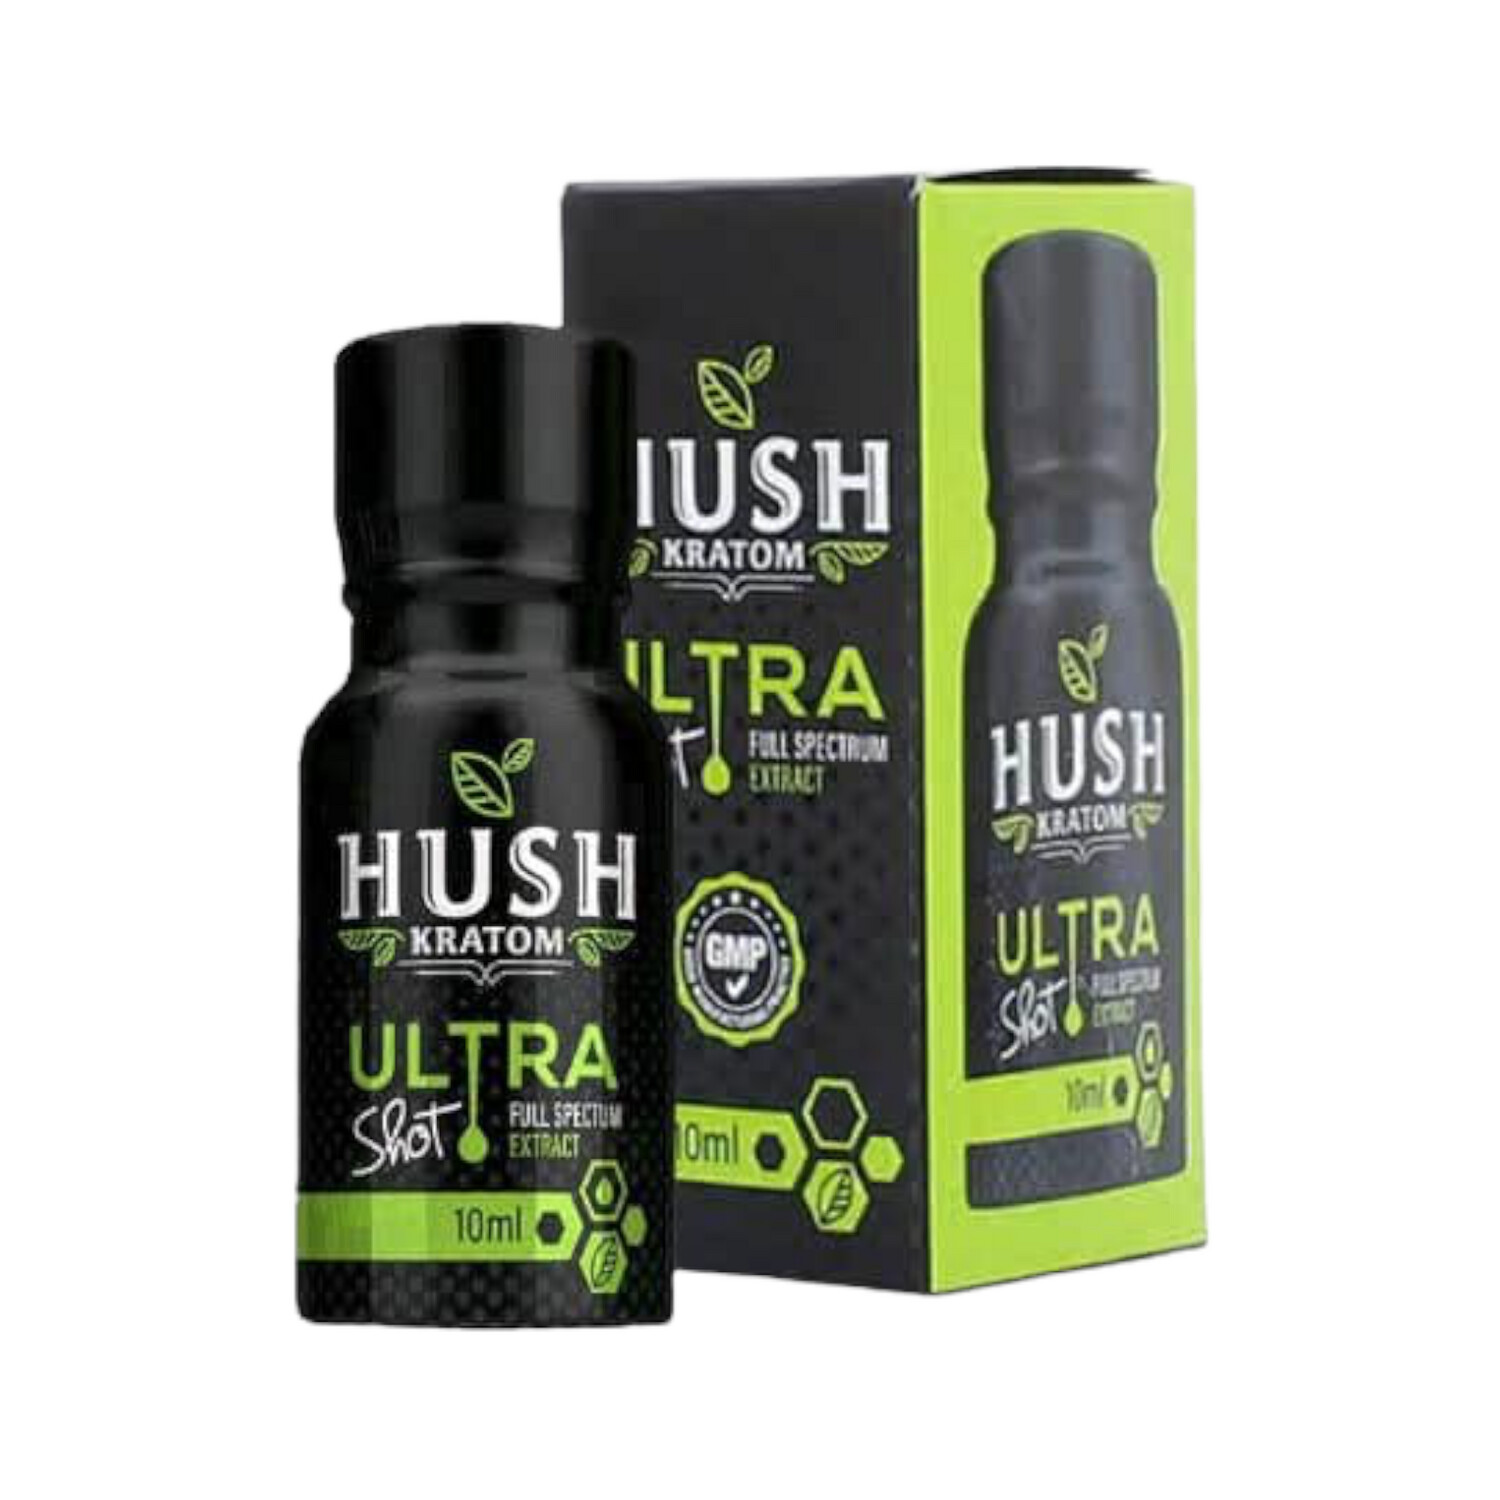 Hush Ultra shot 110 Mit